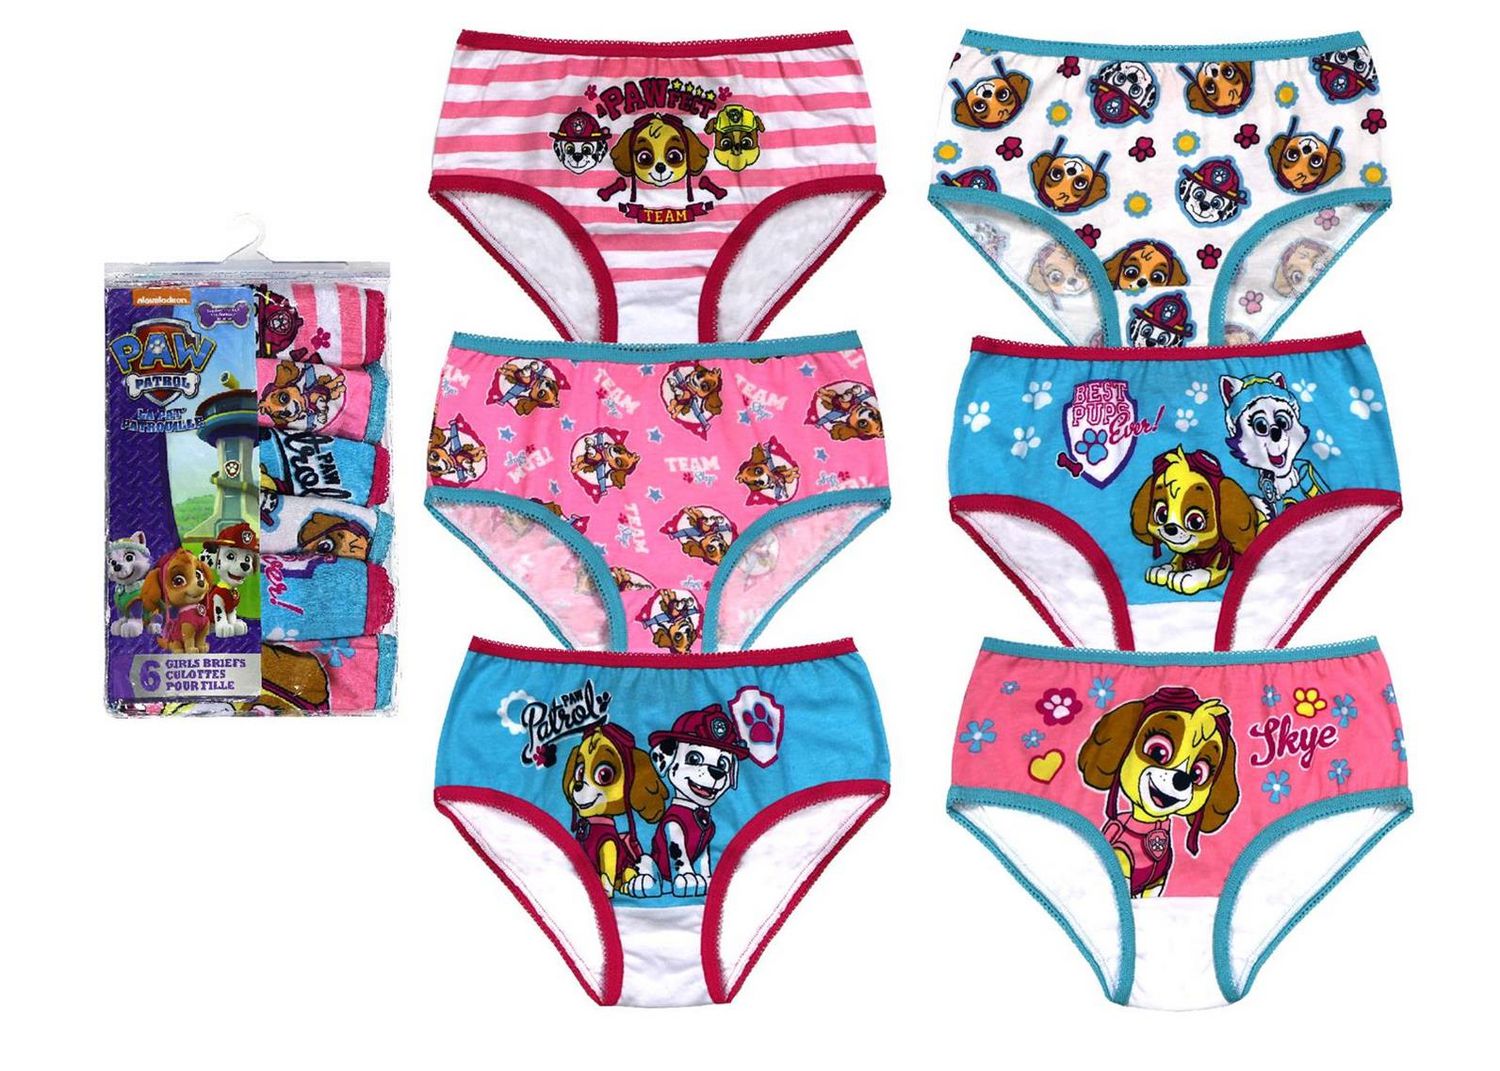 PAW Patrol Brief Underwear Six-Pack for Girls